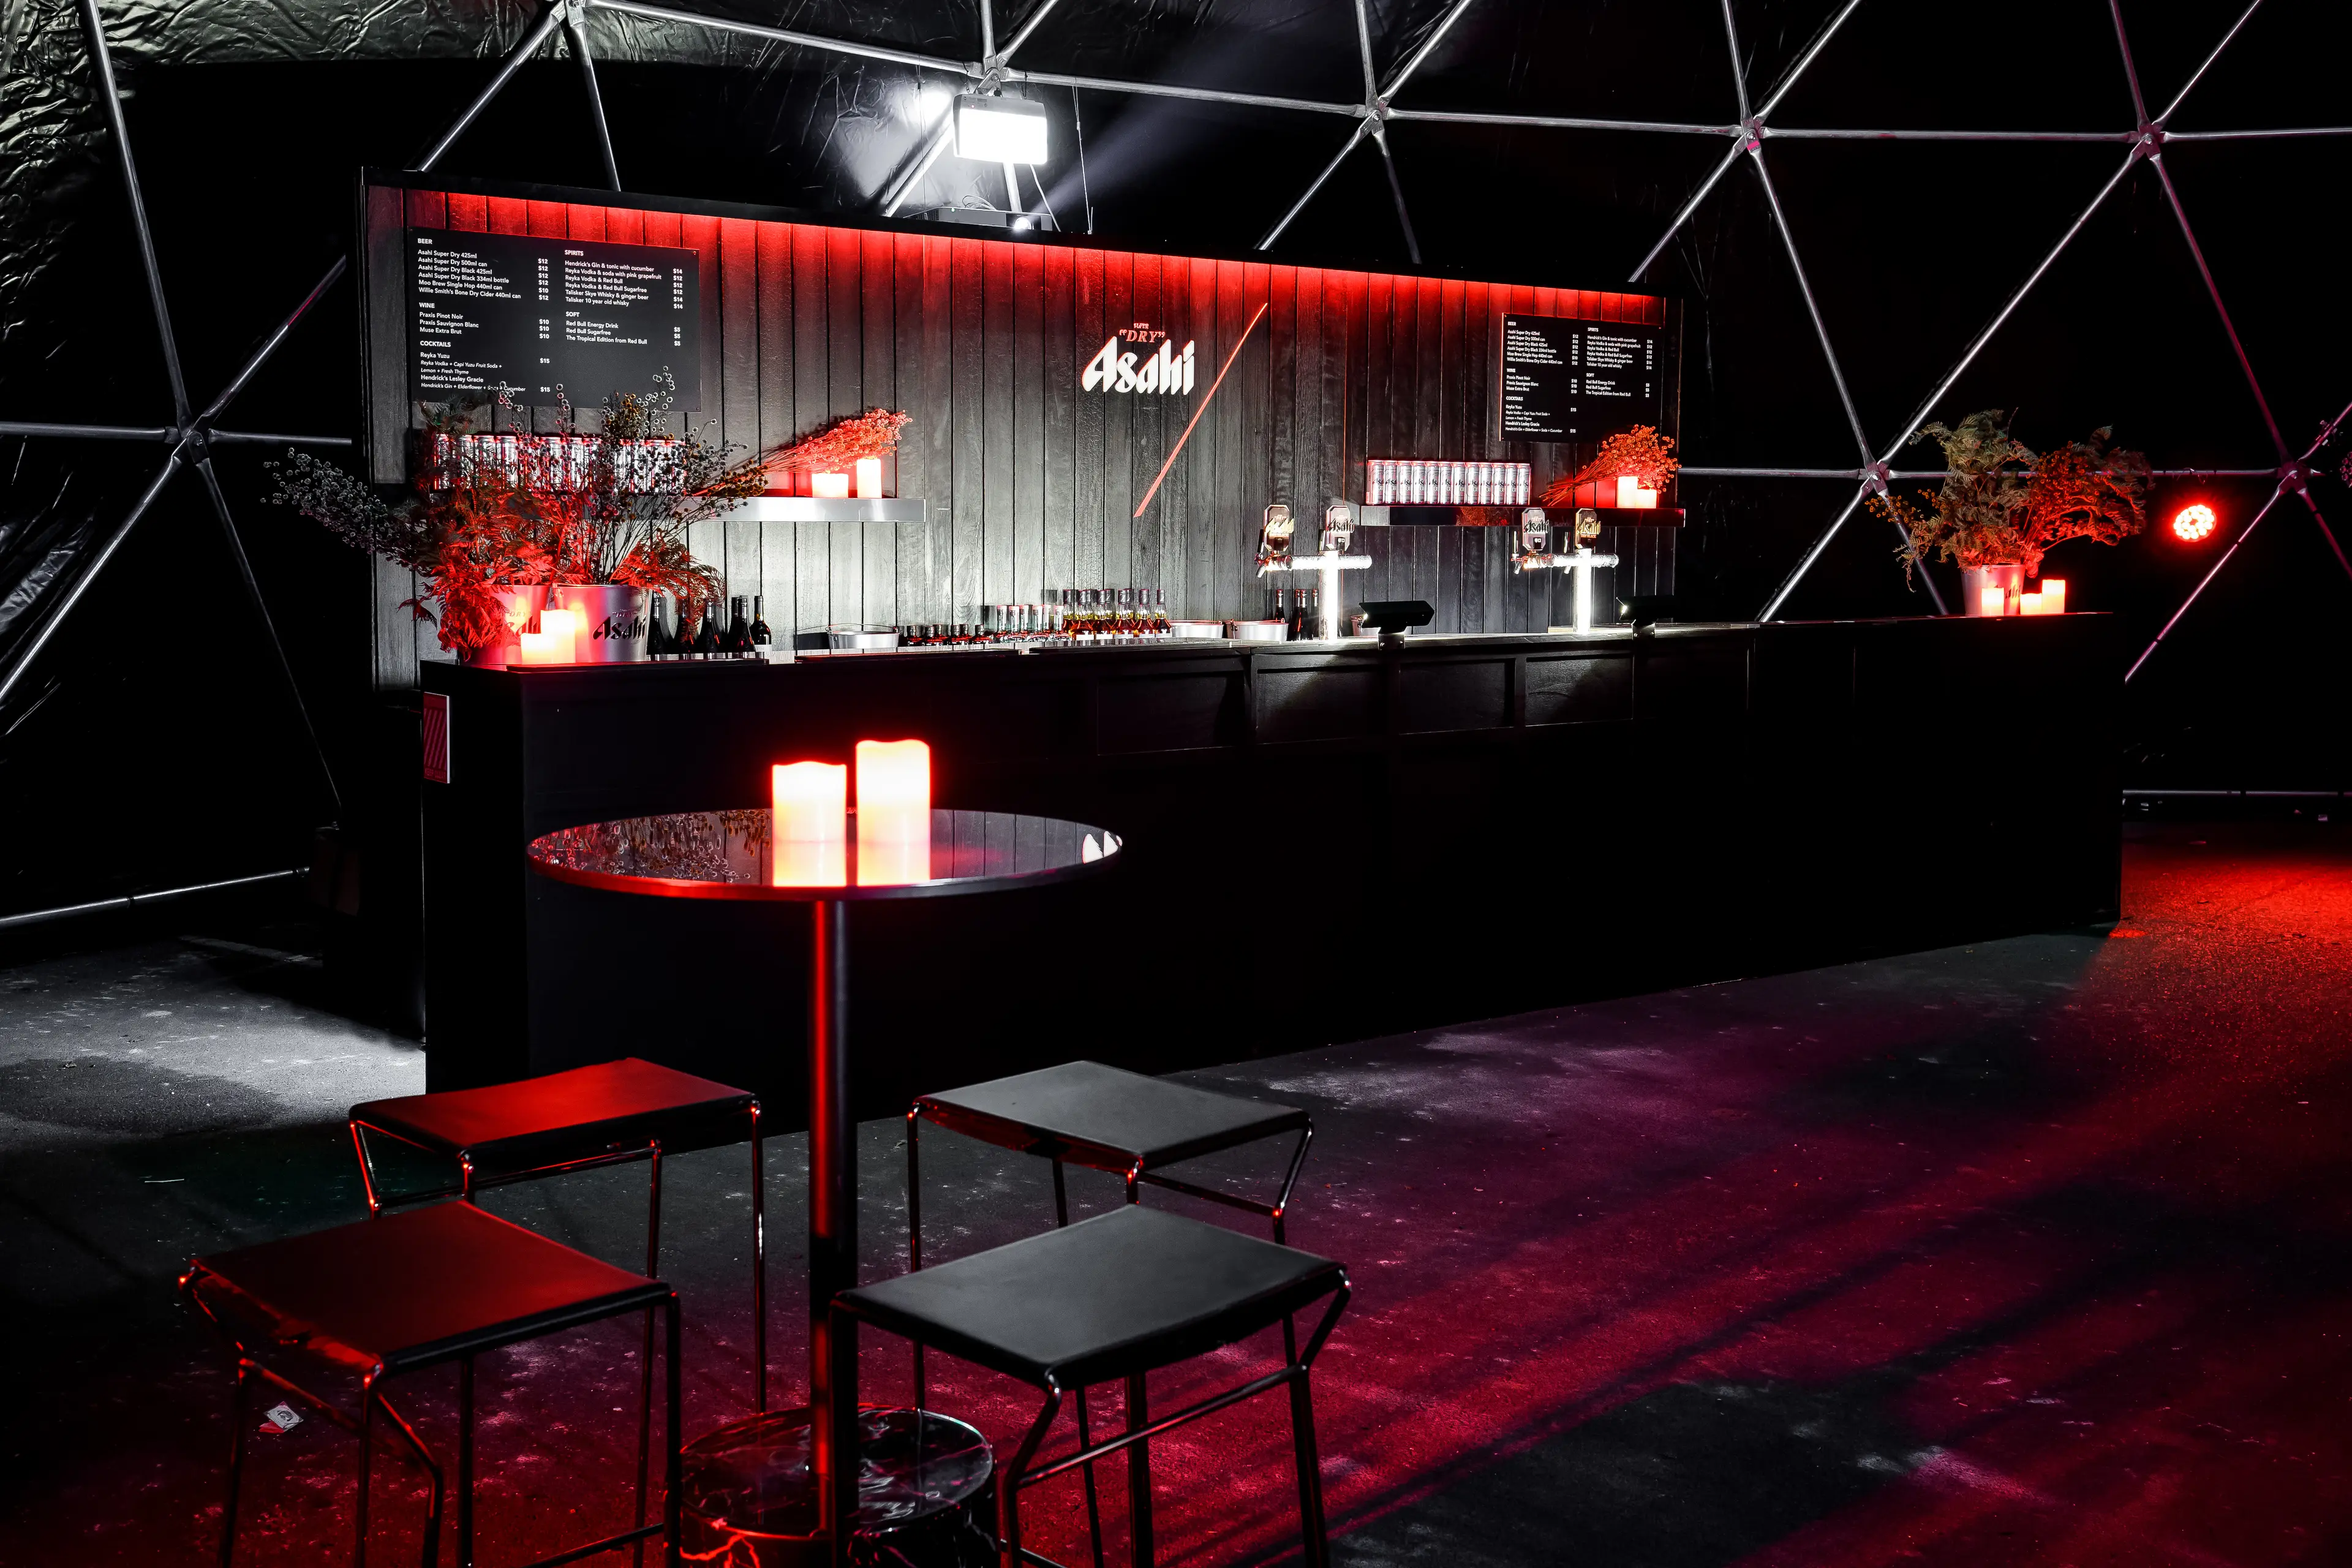 Asahi x Dark Mofo - brand activation, hospitality interior design, event production, build - Hobart, Tasmania, Australia